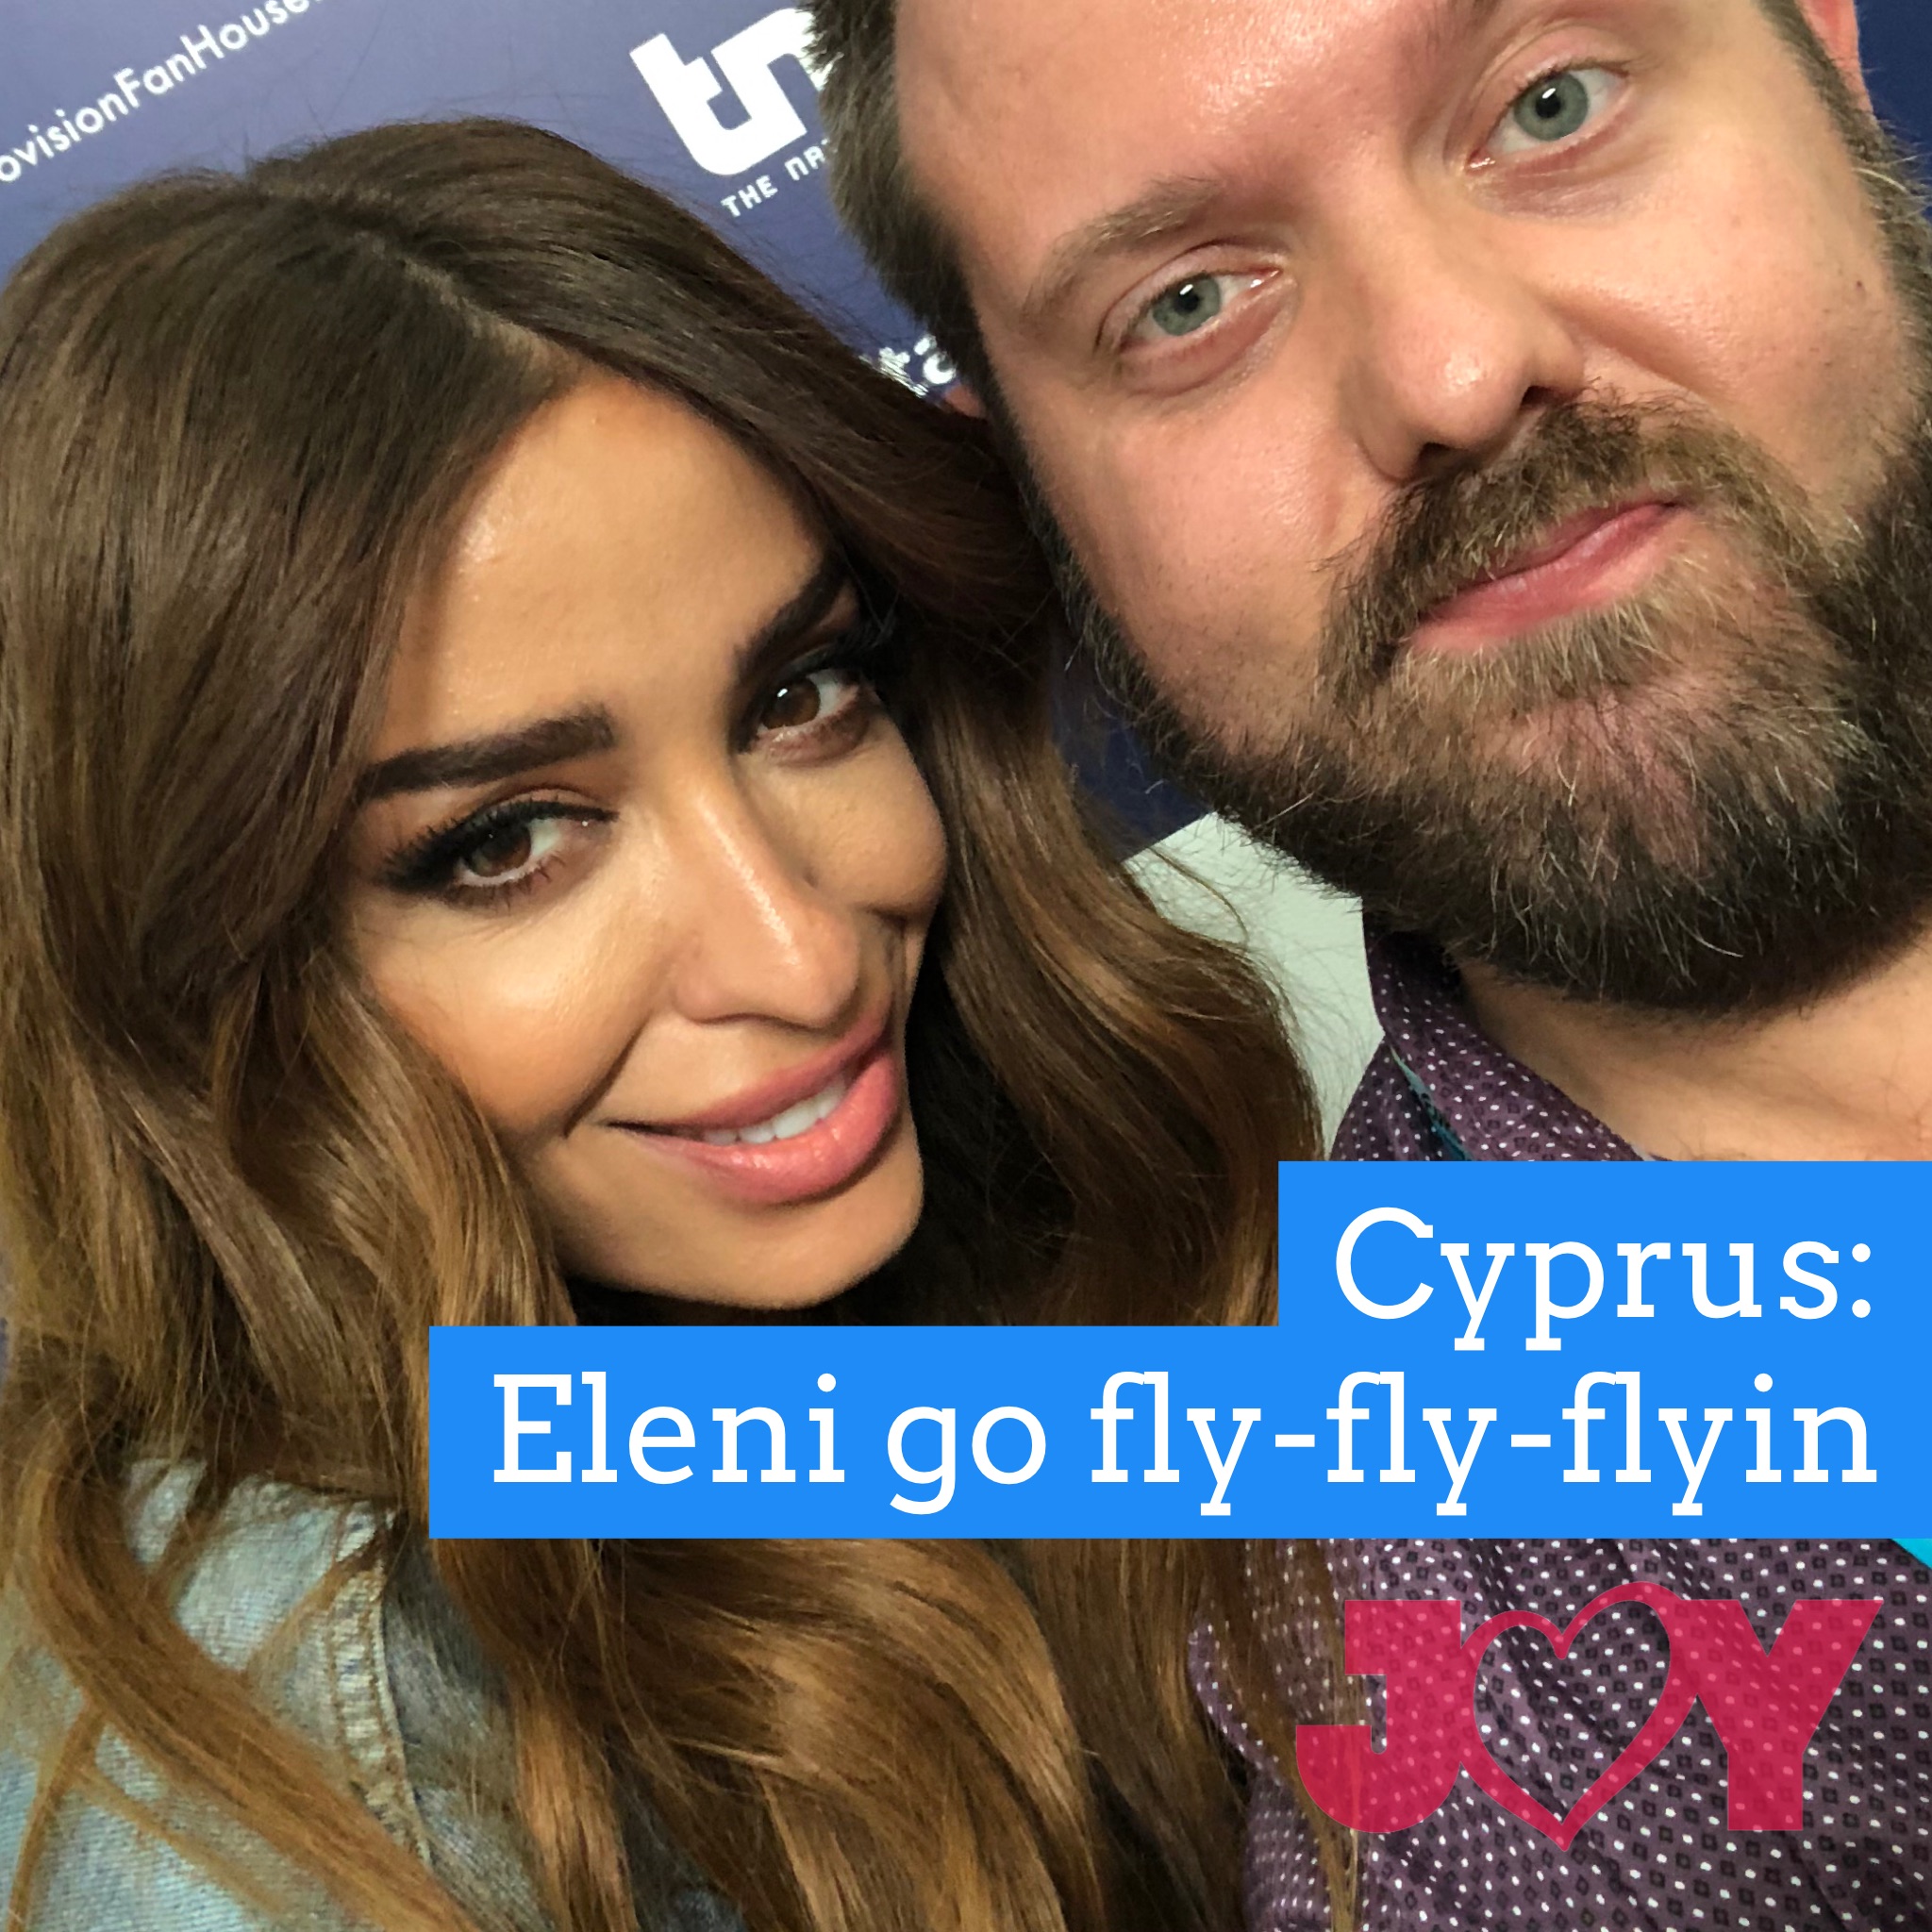 Cyprus: Eleni go fly-fly-flyin